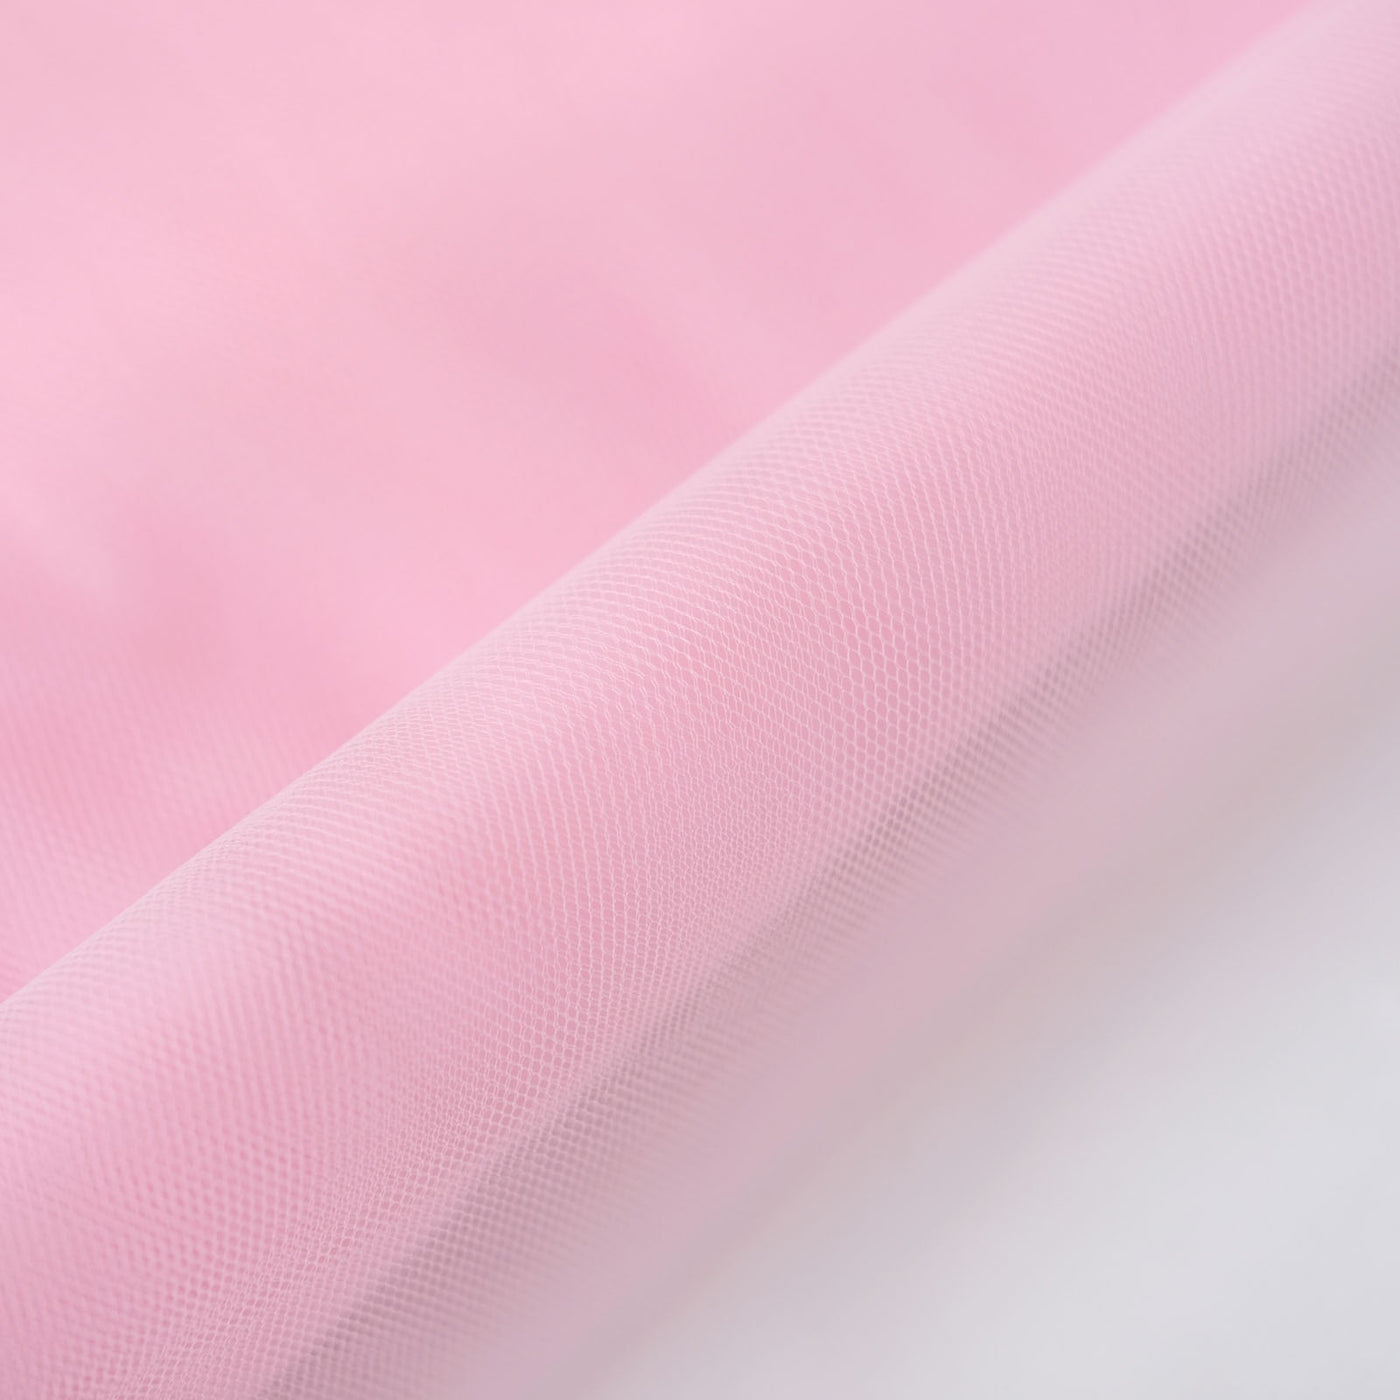 54x40 Yards Pink Tulle Fabric Bolt | eFavormart.com